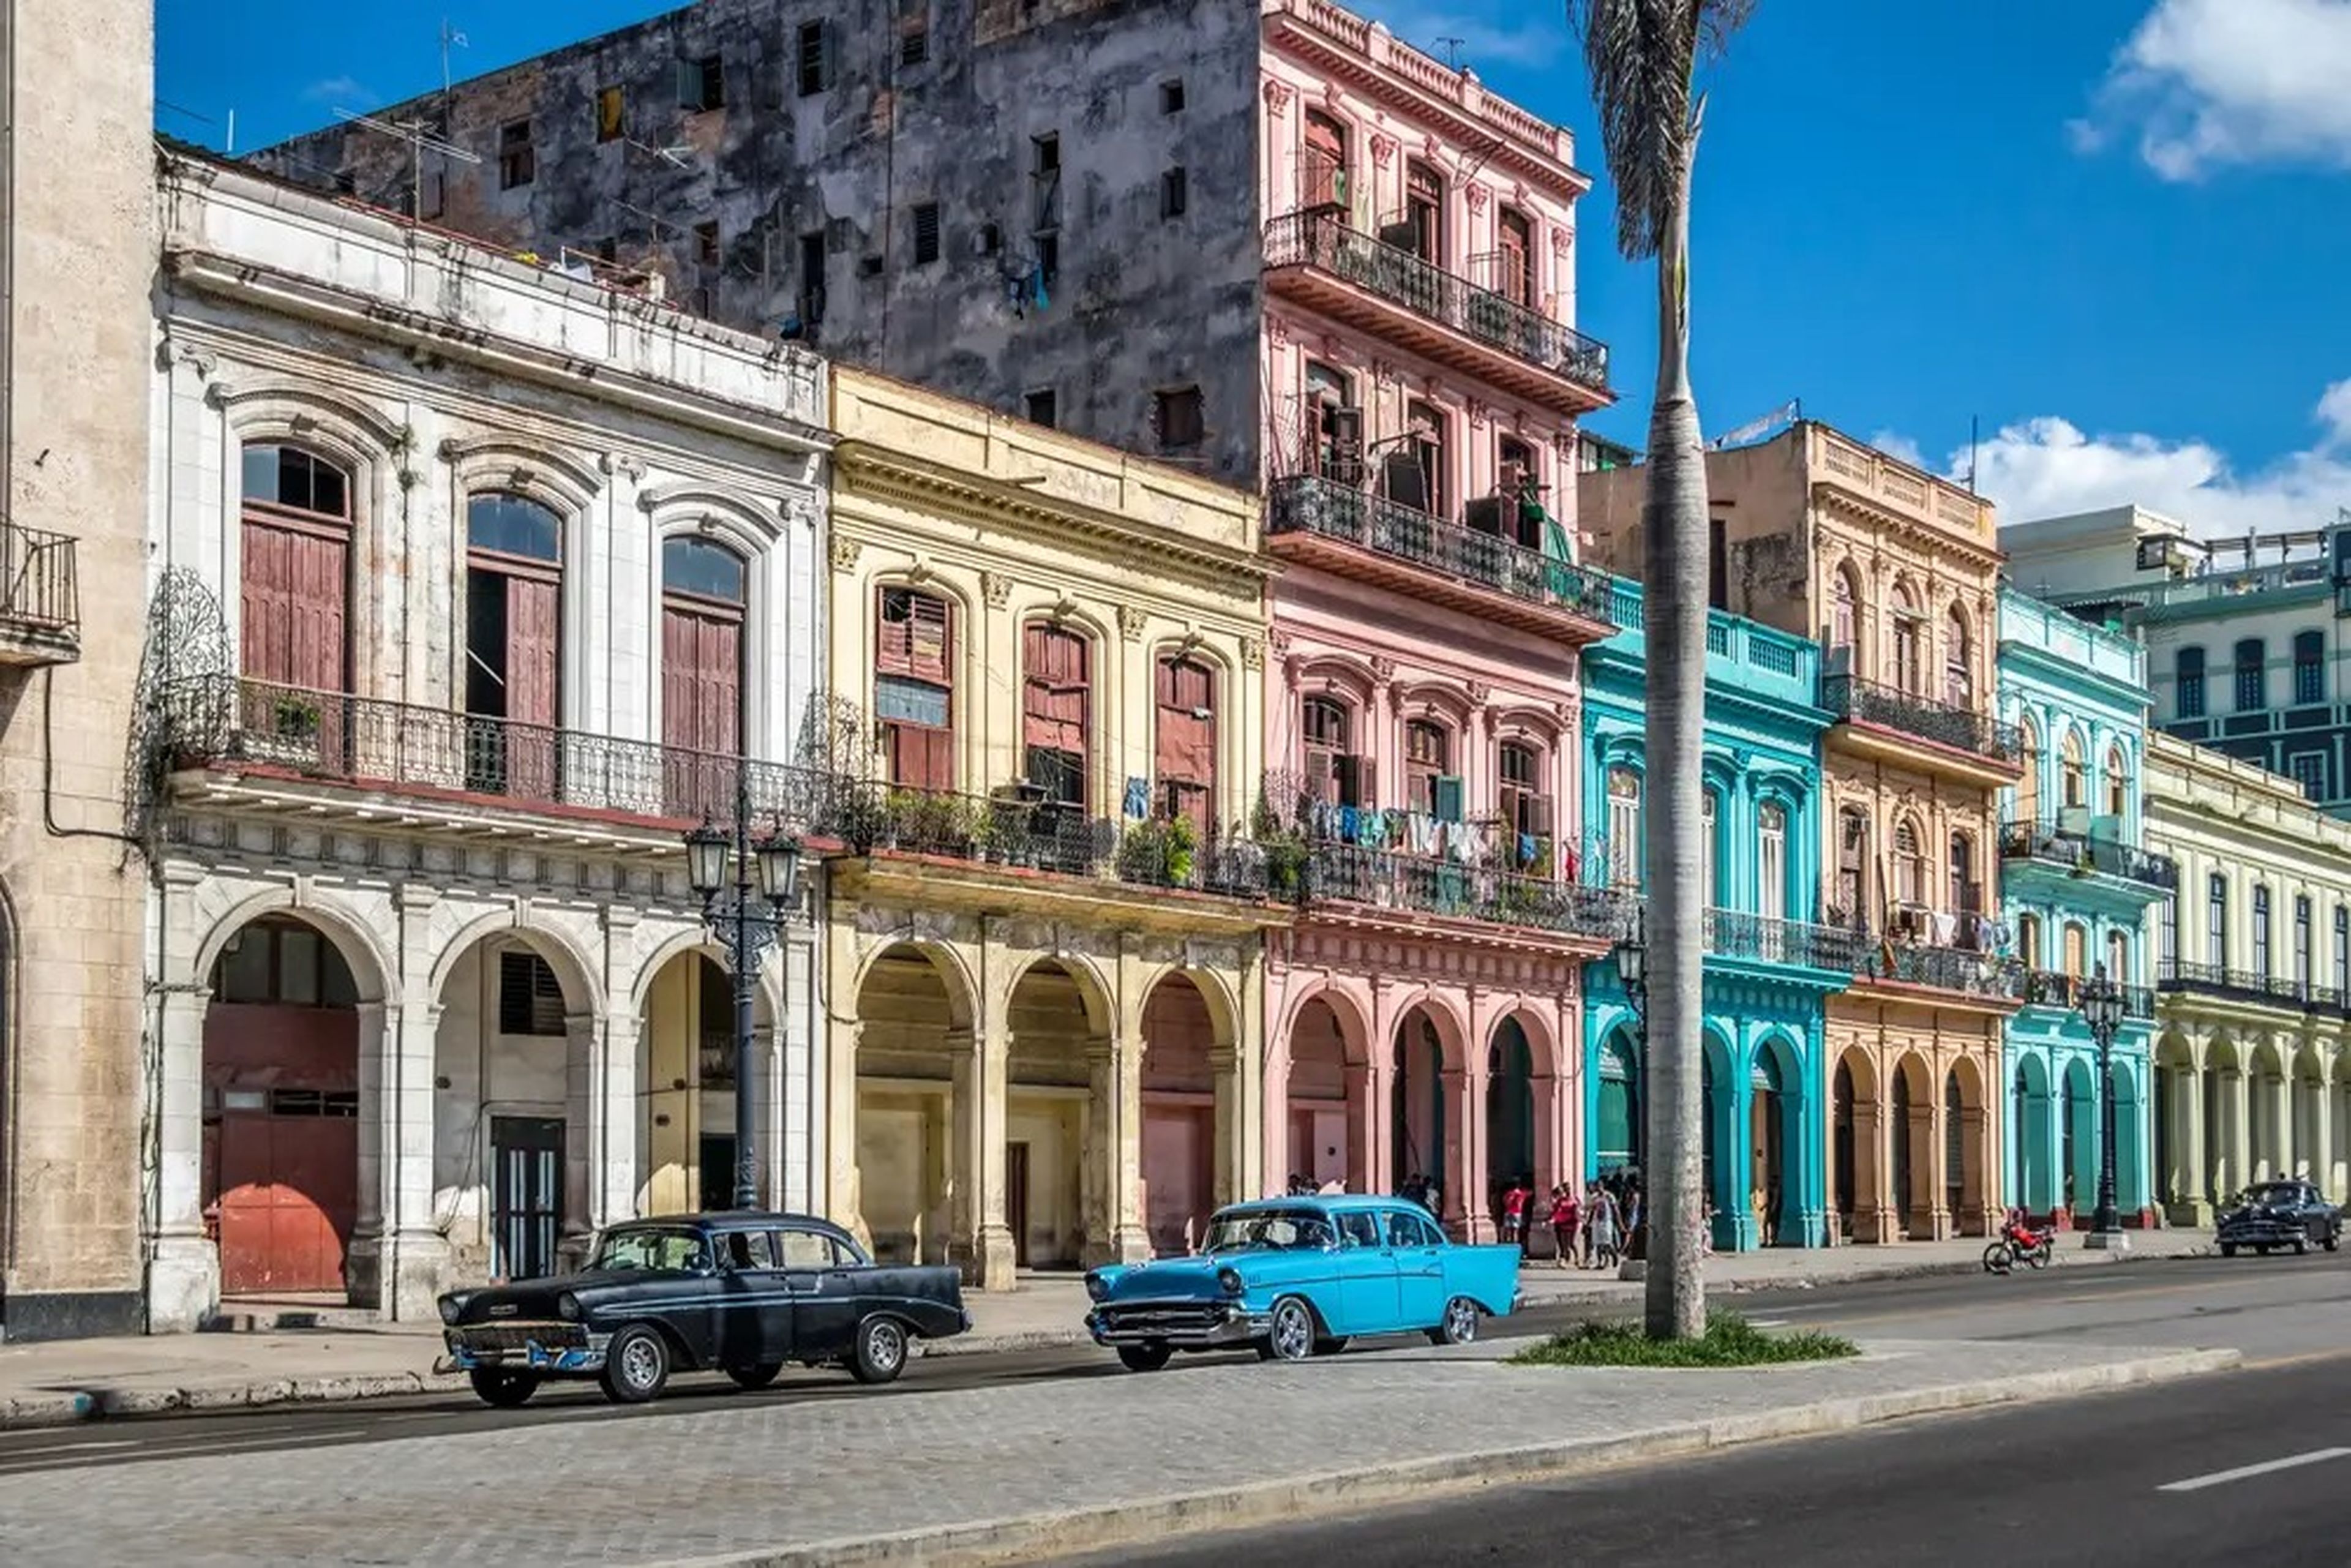 A strip of colorful buildings in Havana, Cuba